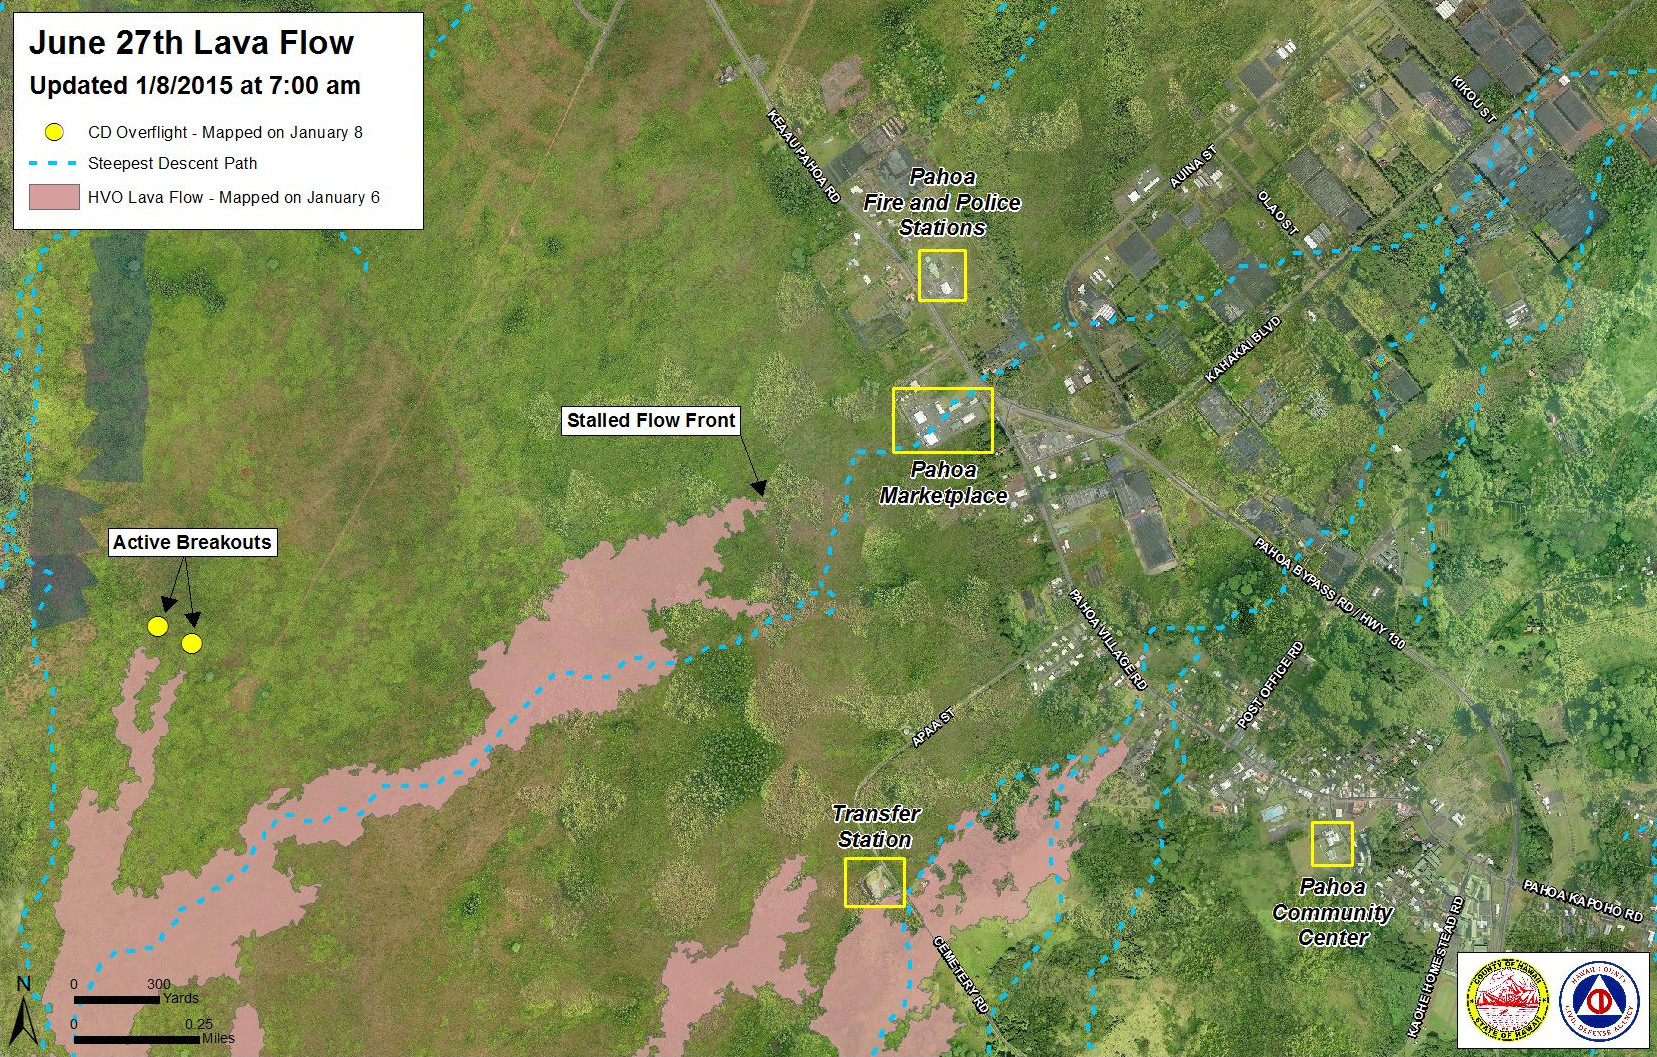 Civil Defense Lava Flow Map - Updated Thursday, 1/8/15 at 7:00 am